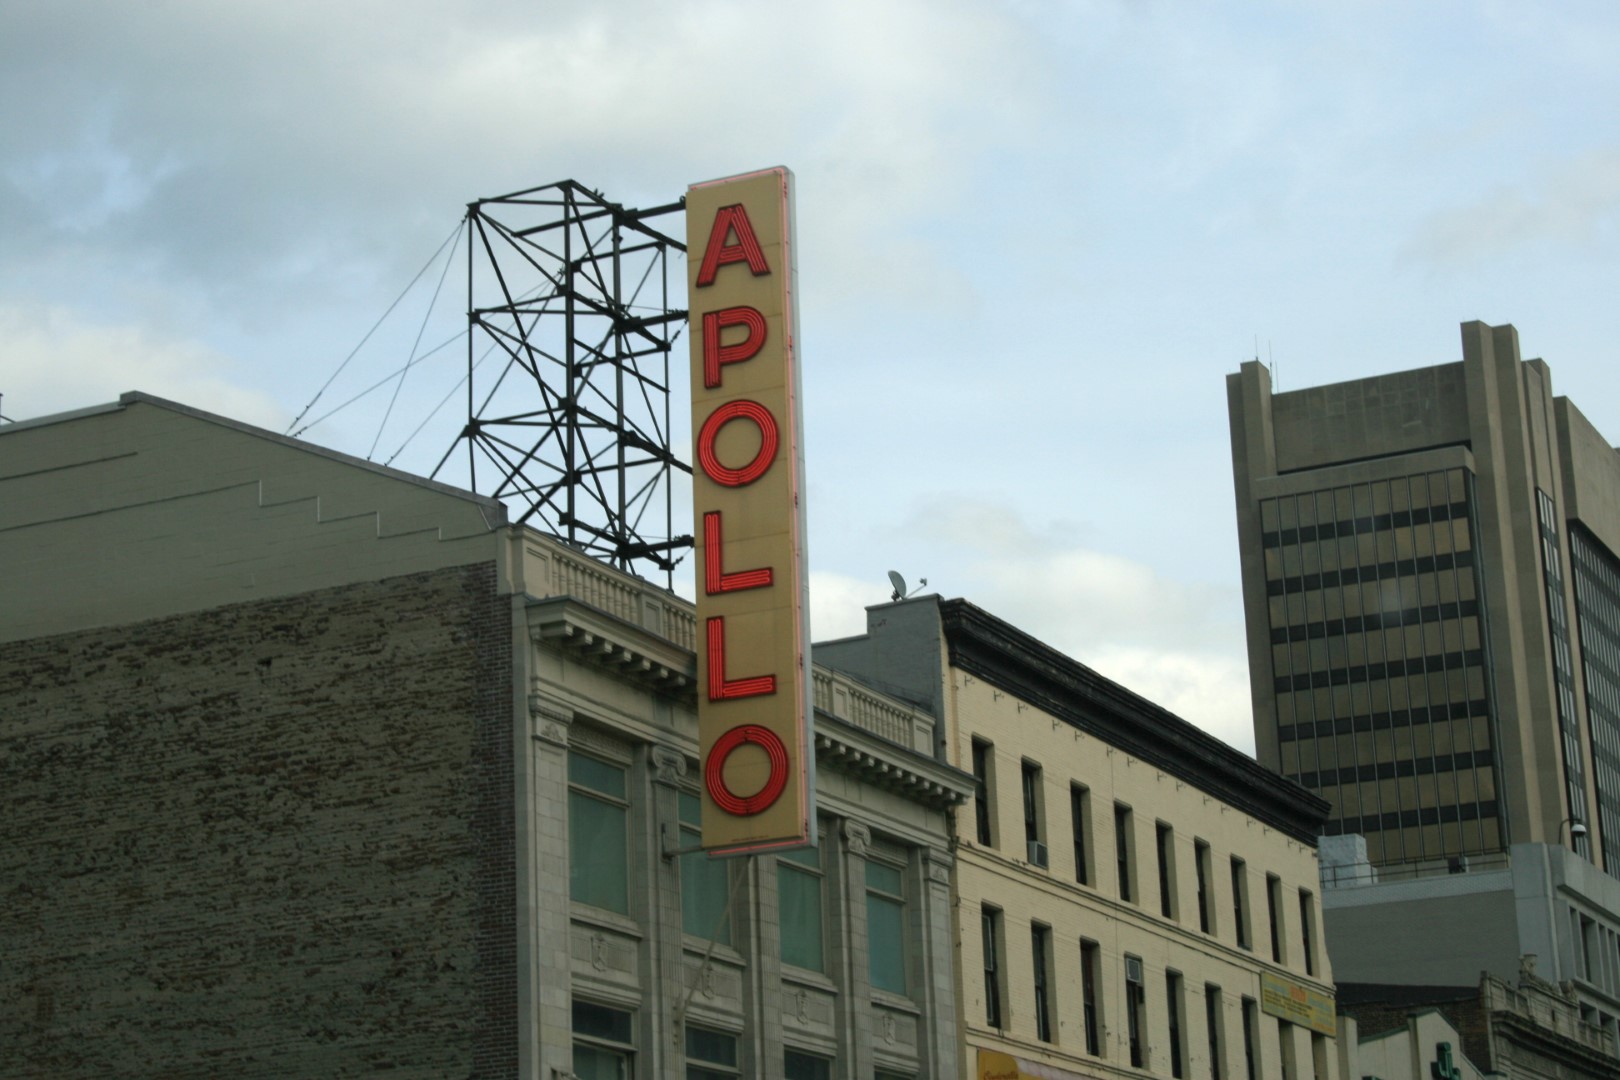 Apollo building